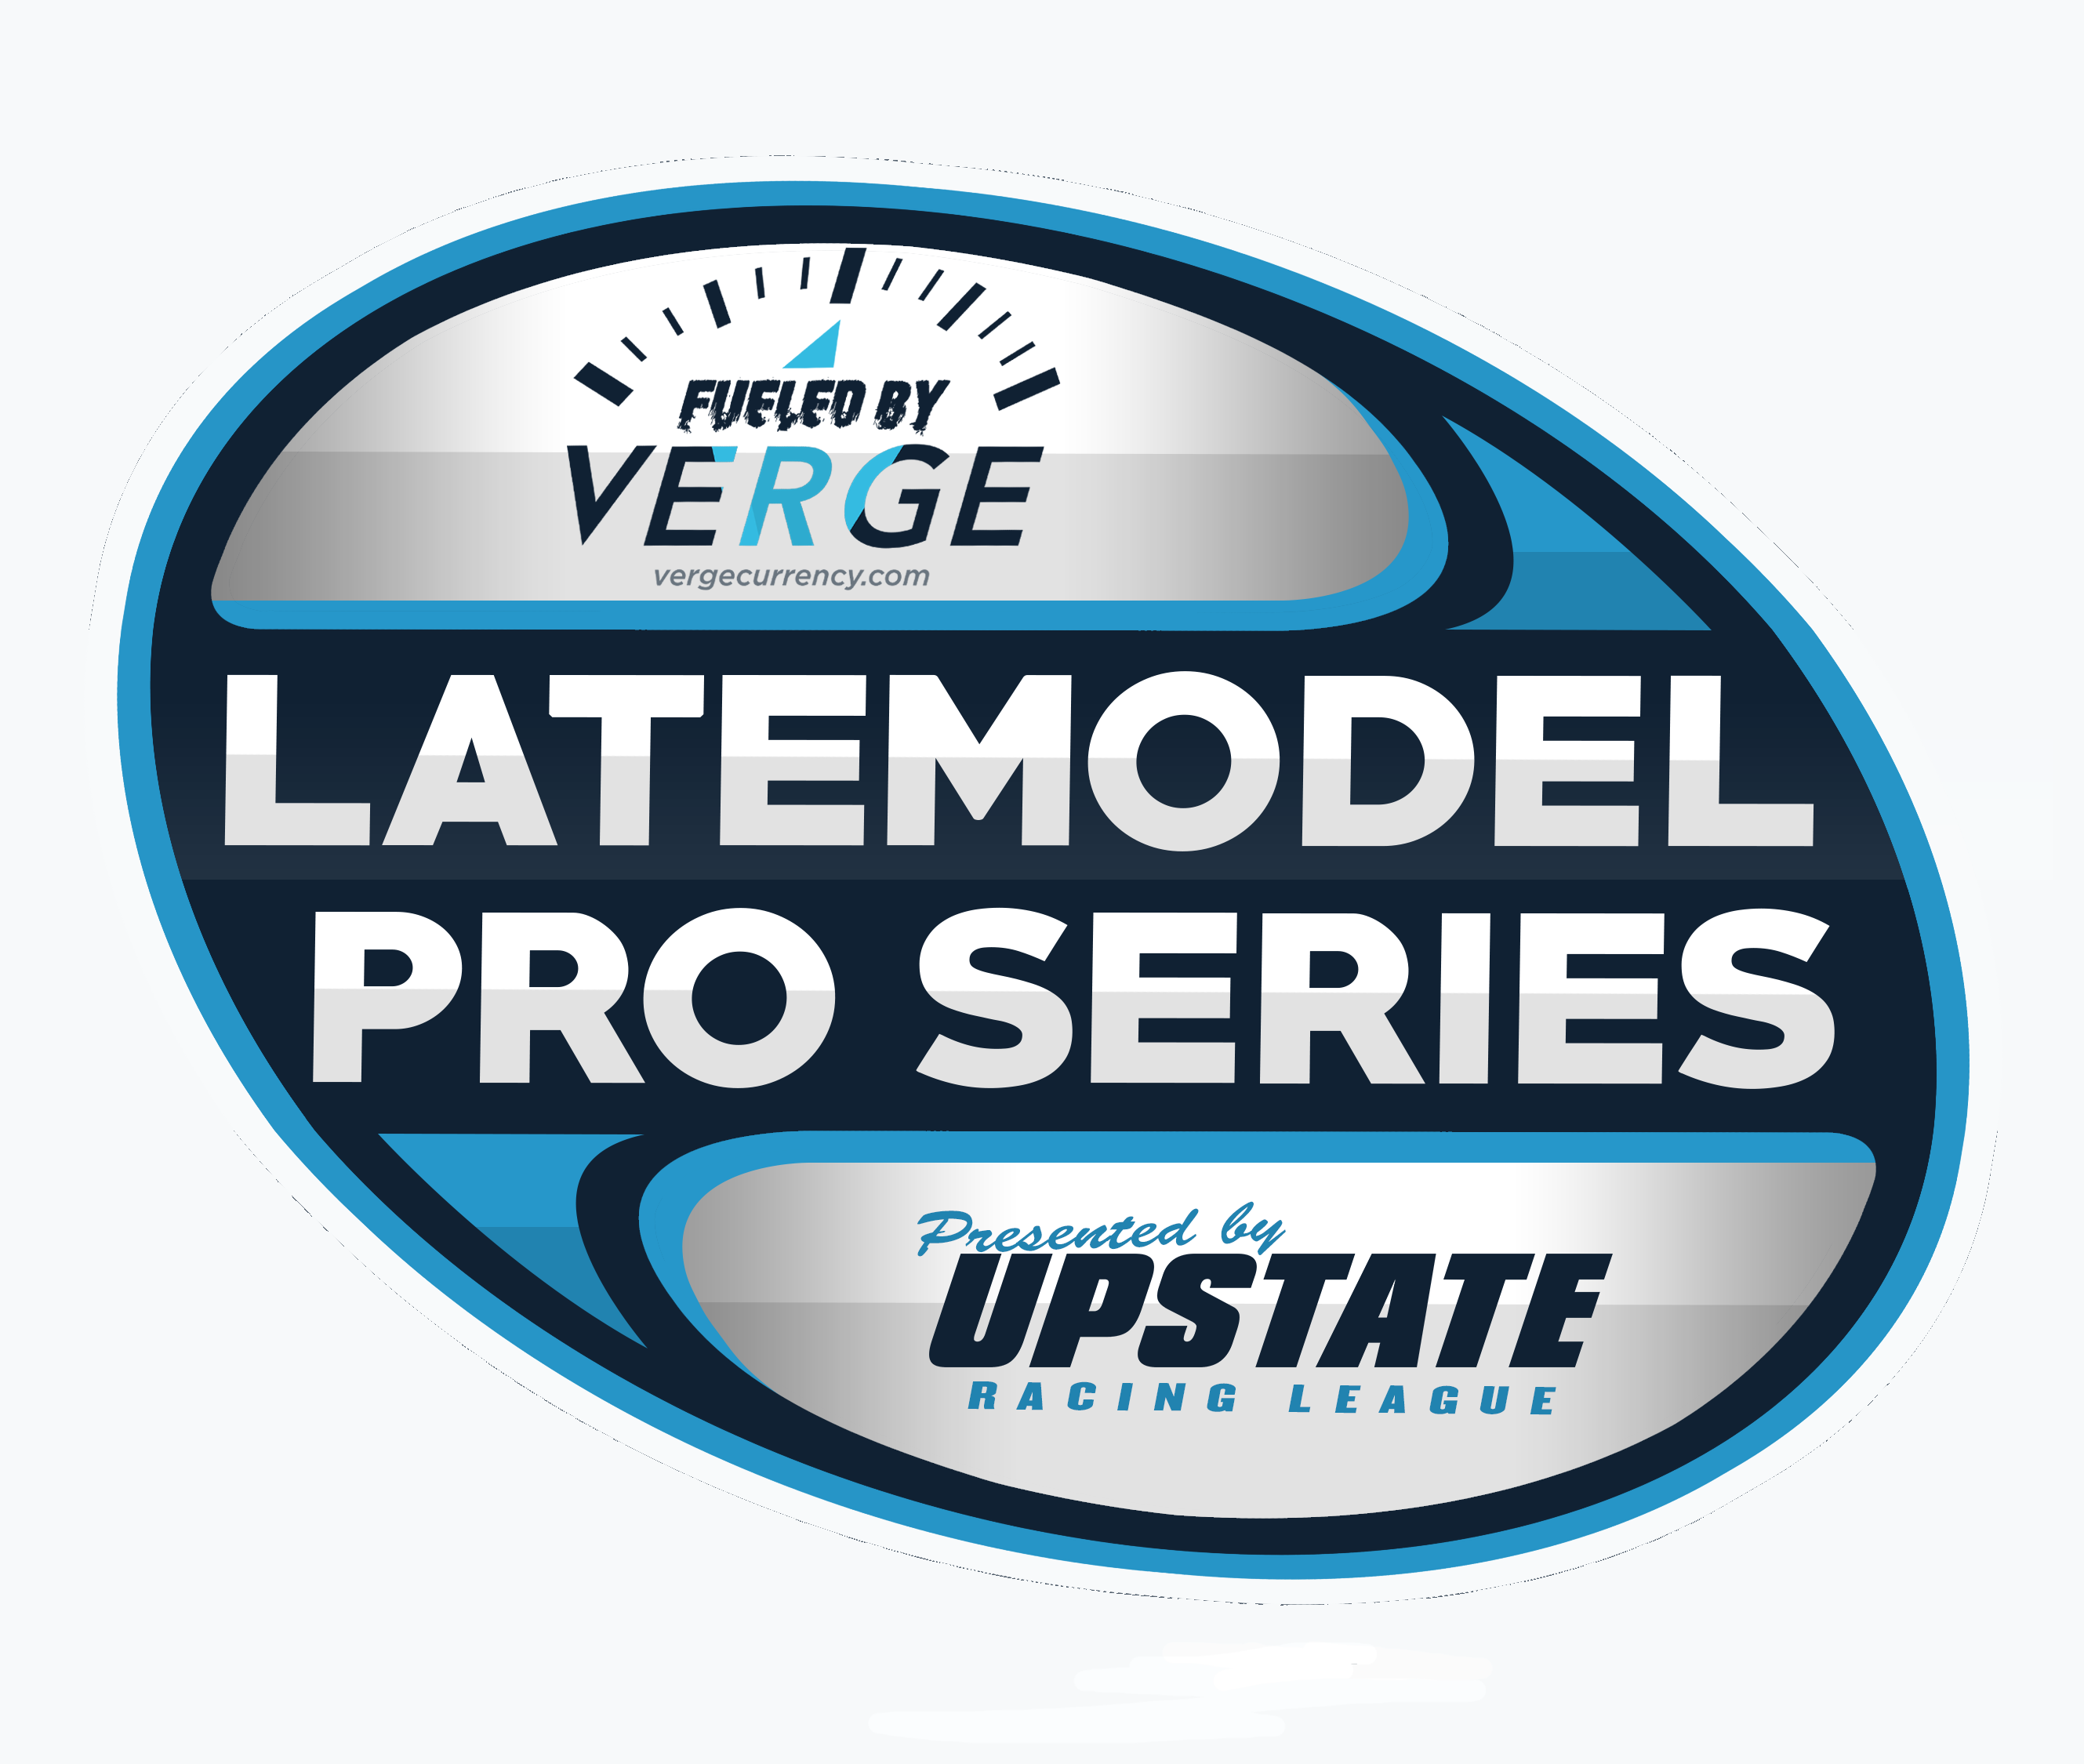 Results Season 9 Upstate Racing League